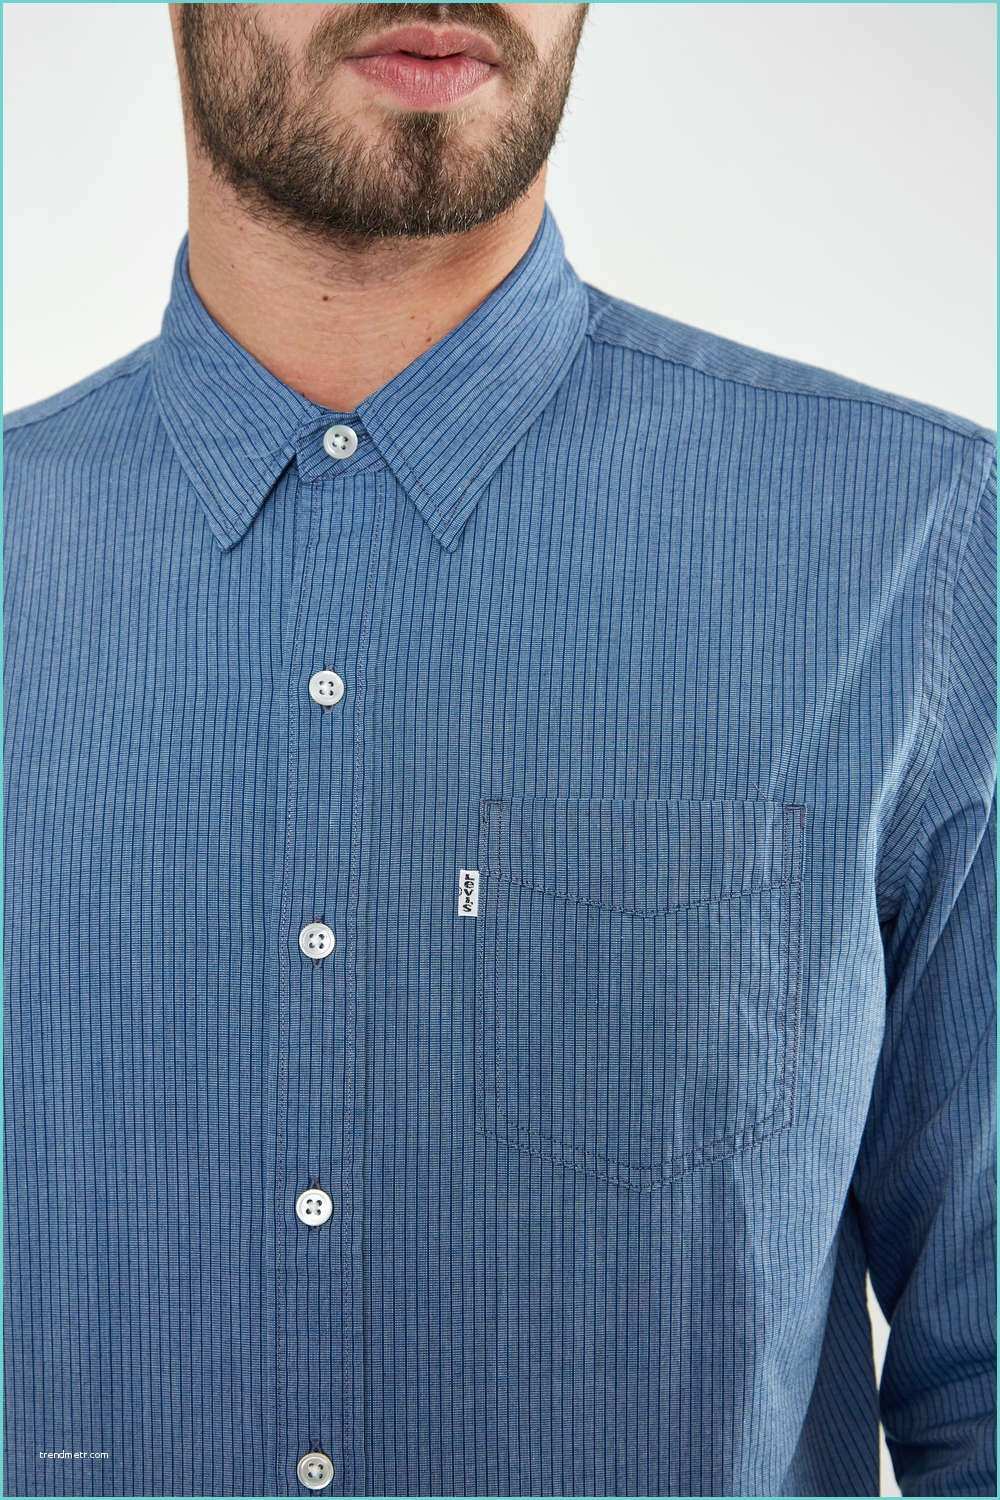 Chemise En Jean Levis ⇒chemise En Jeans Levi S Sunset 1 Pocket Shirt Bleu Indigo